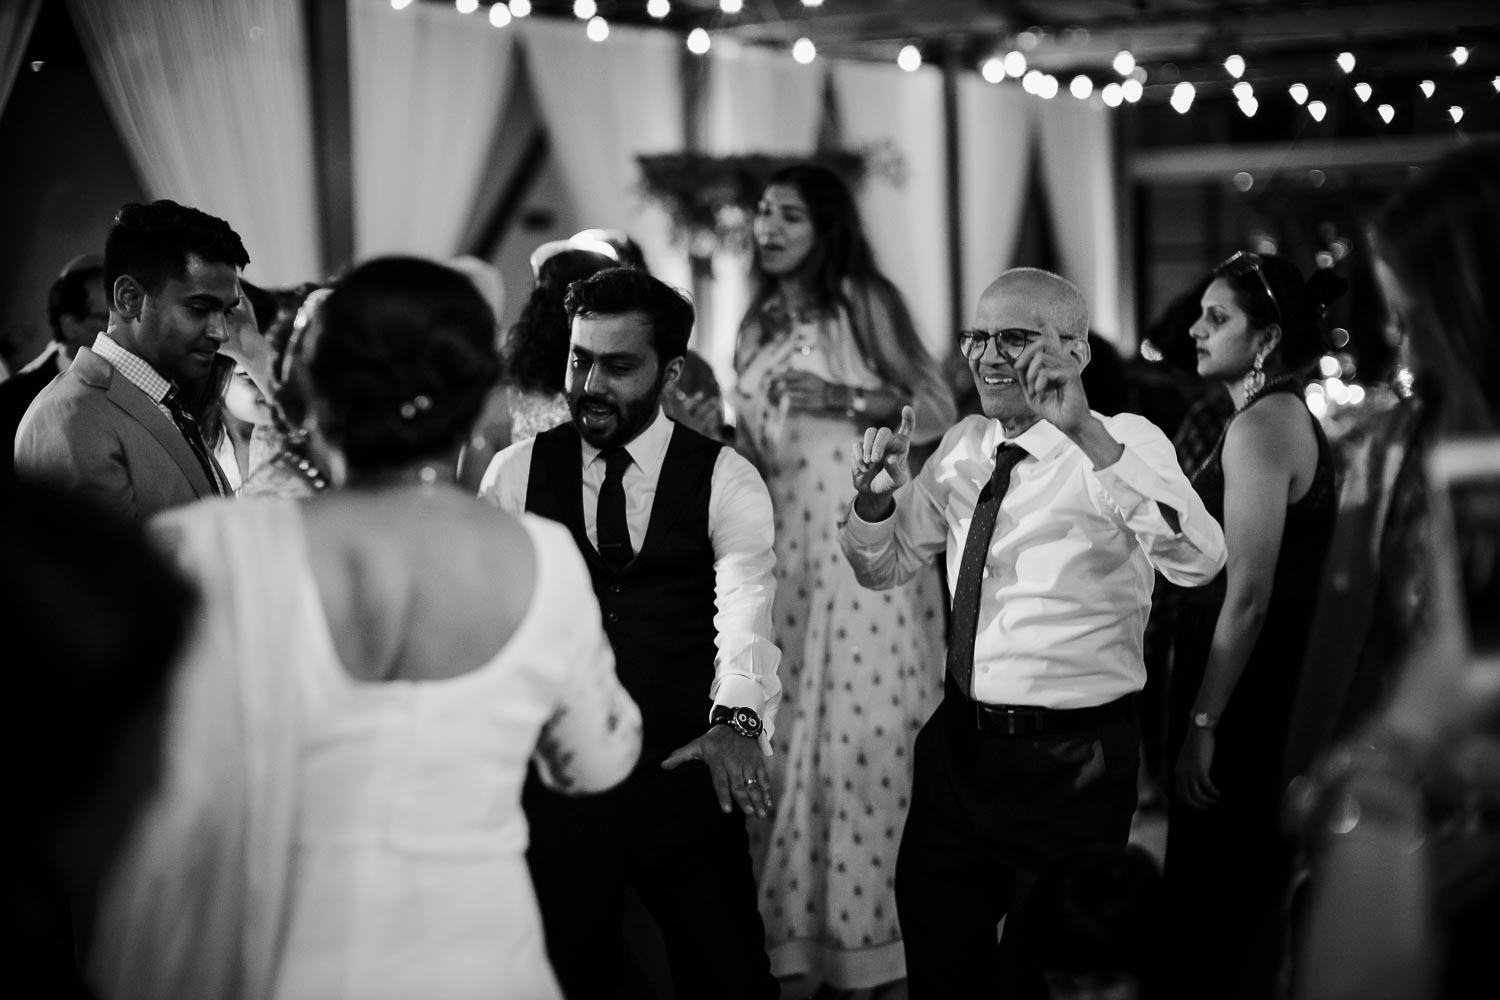 Wedding guests dance during wedding reception